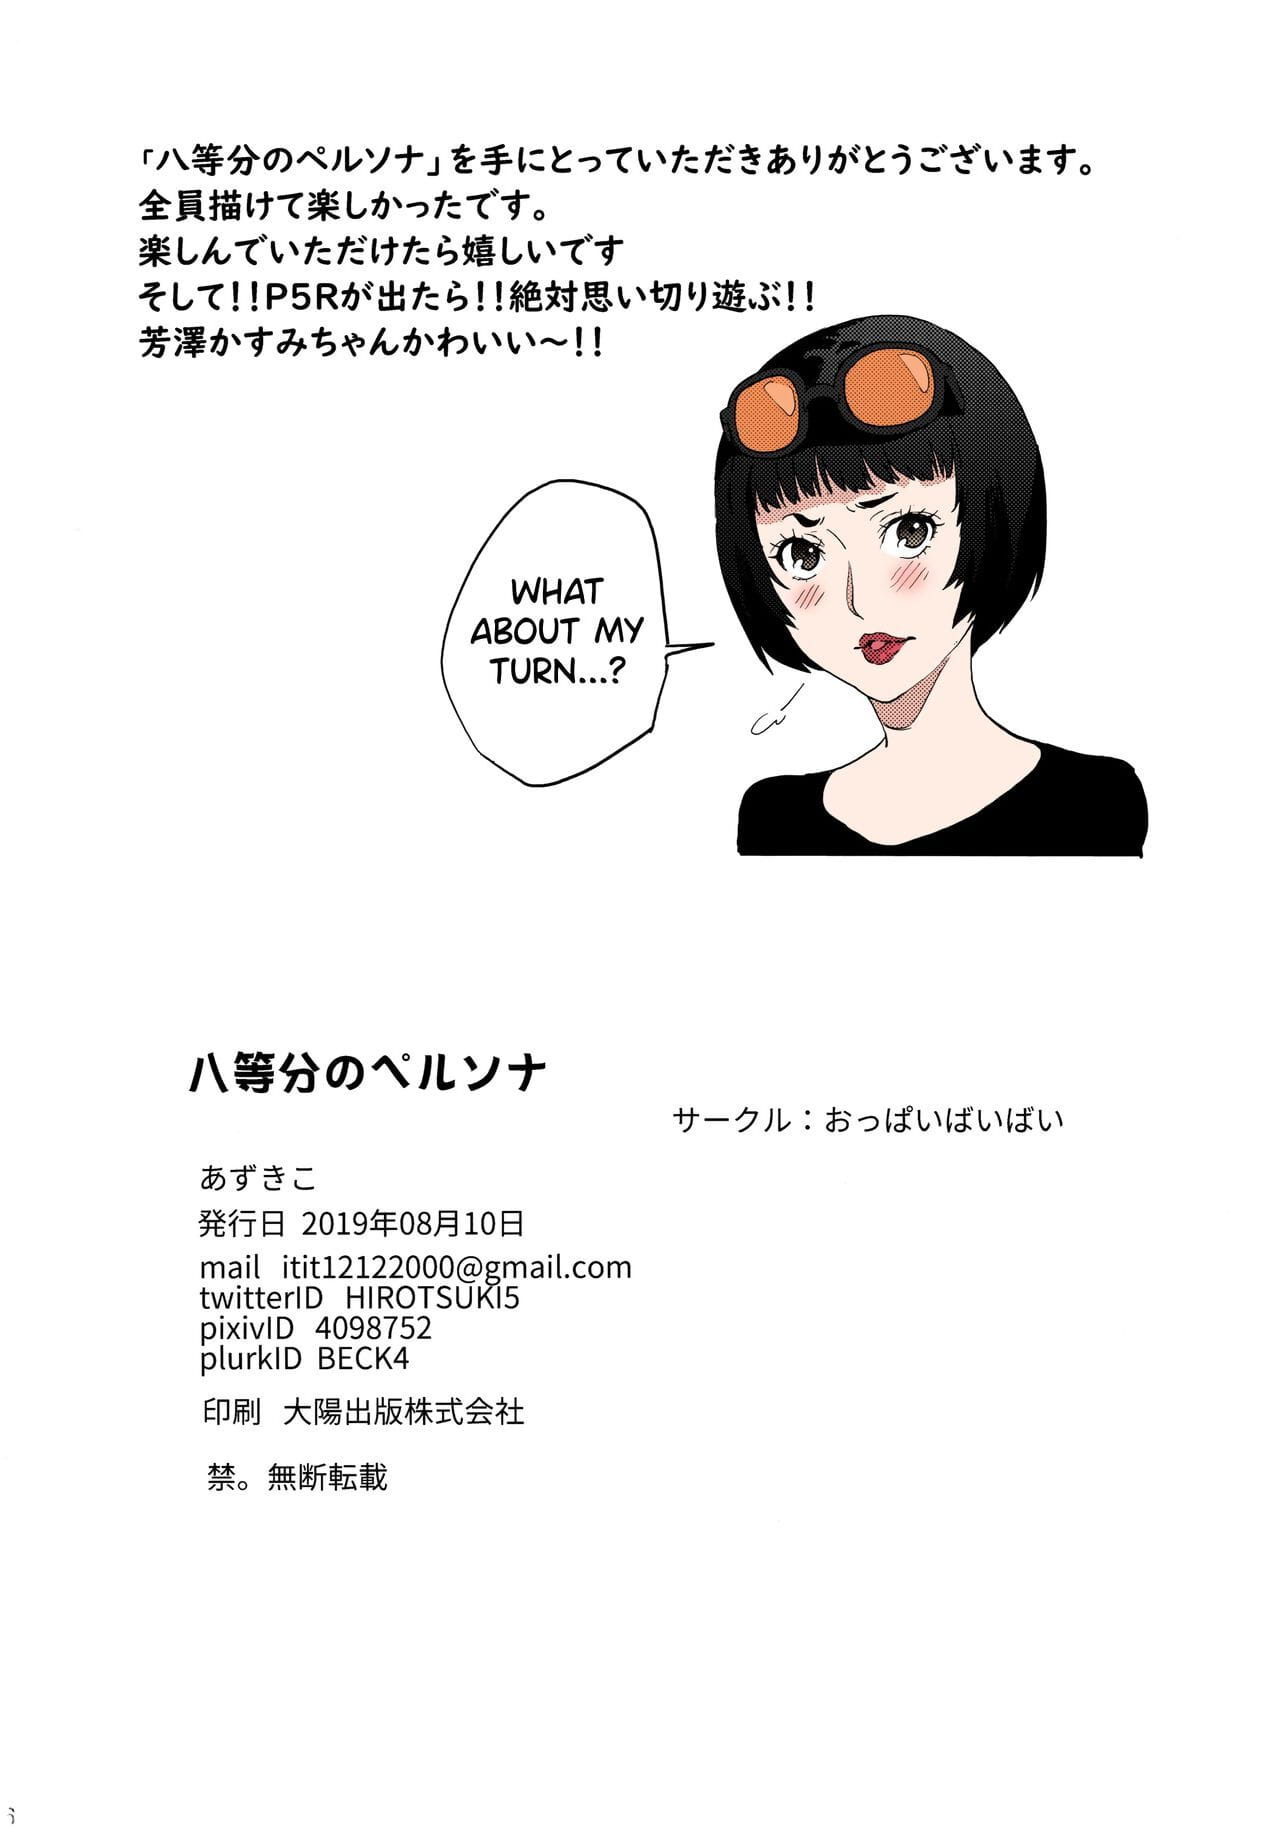 c96 oppai باي باي azukiko hattoubun لا شخصية شخصية 5 اللغة الإنجليزية biribiri الملونة spdsd جزء 2